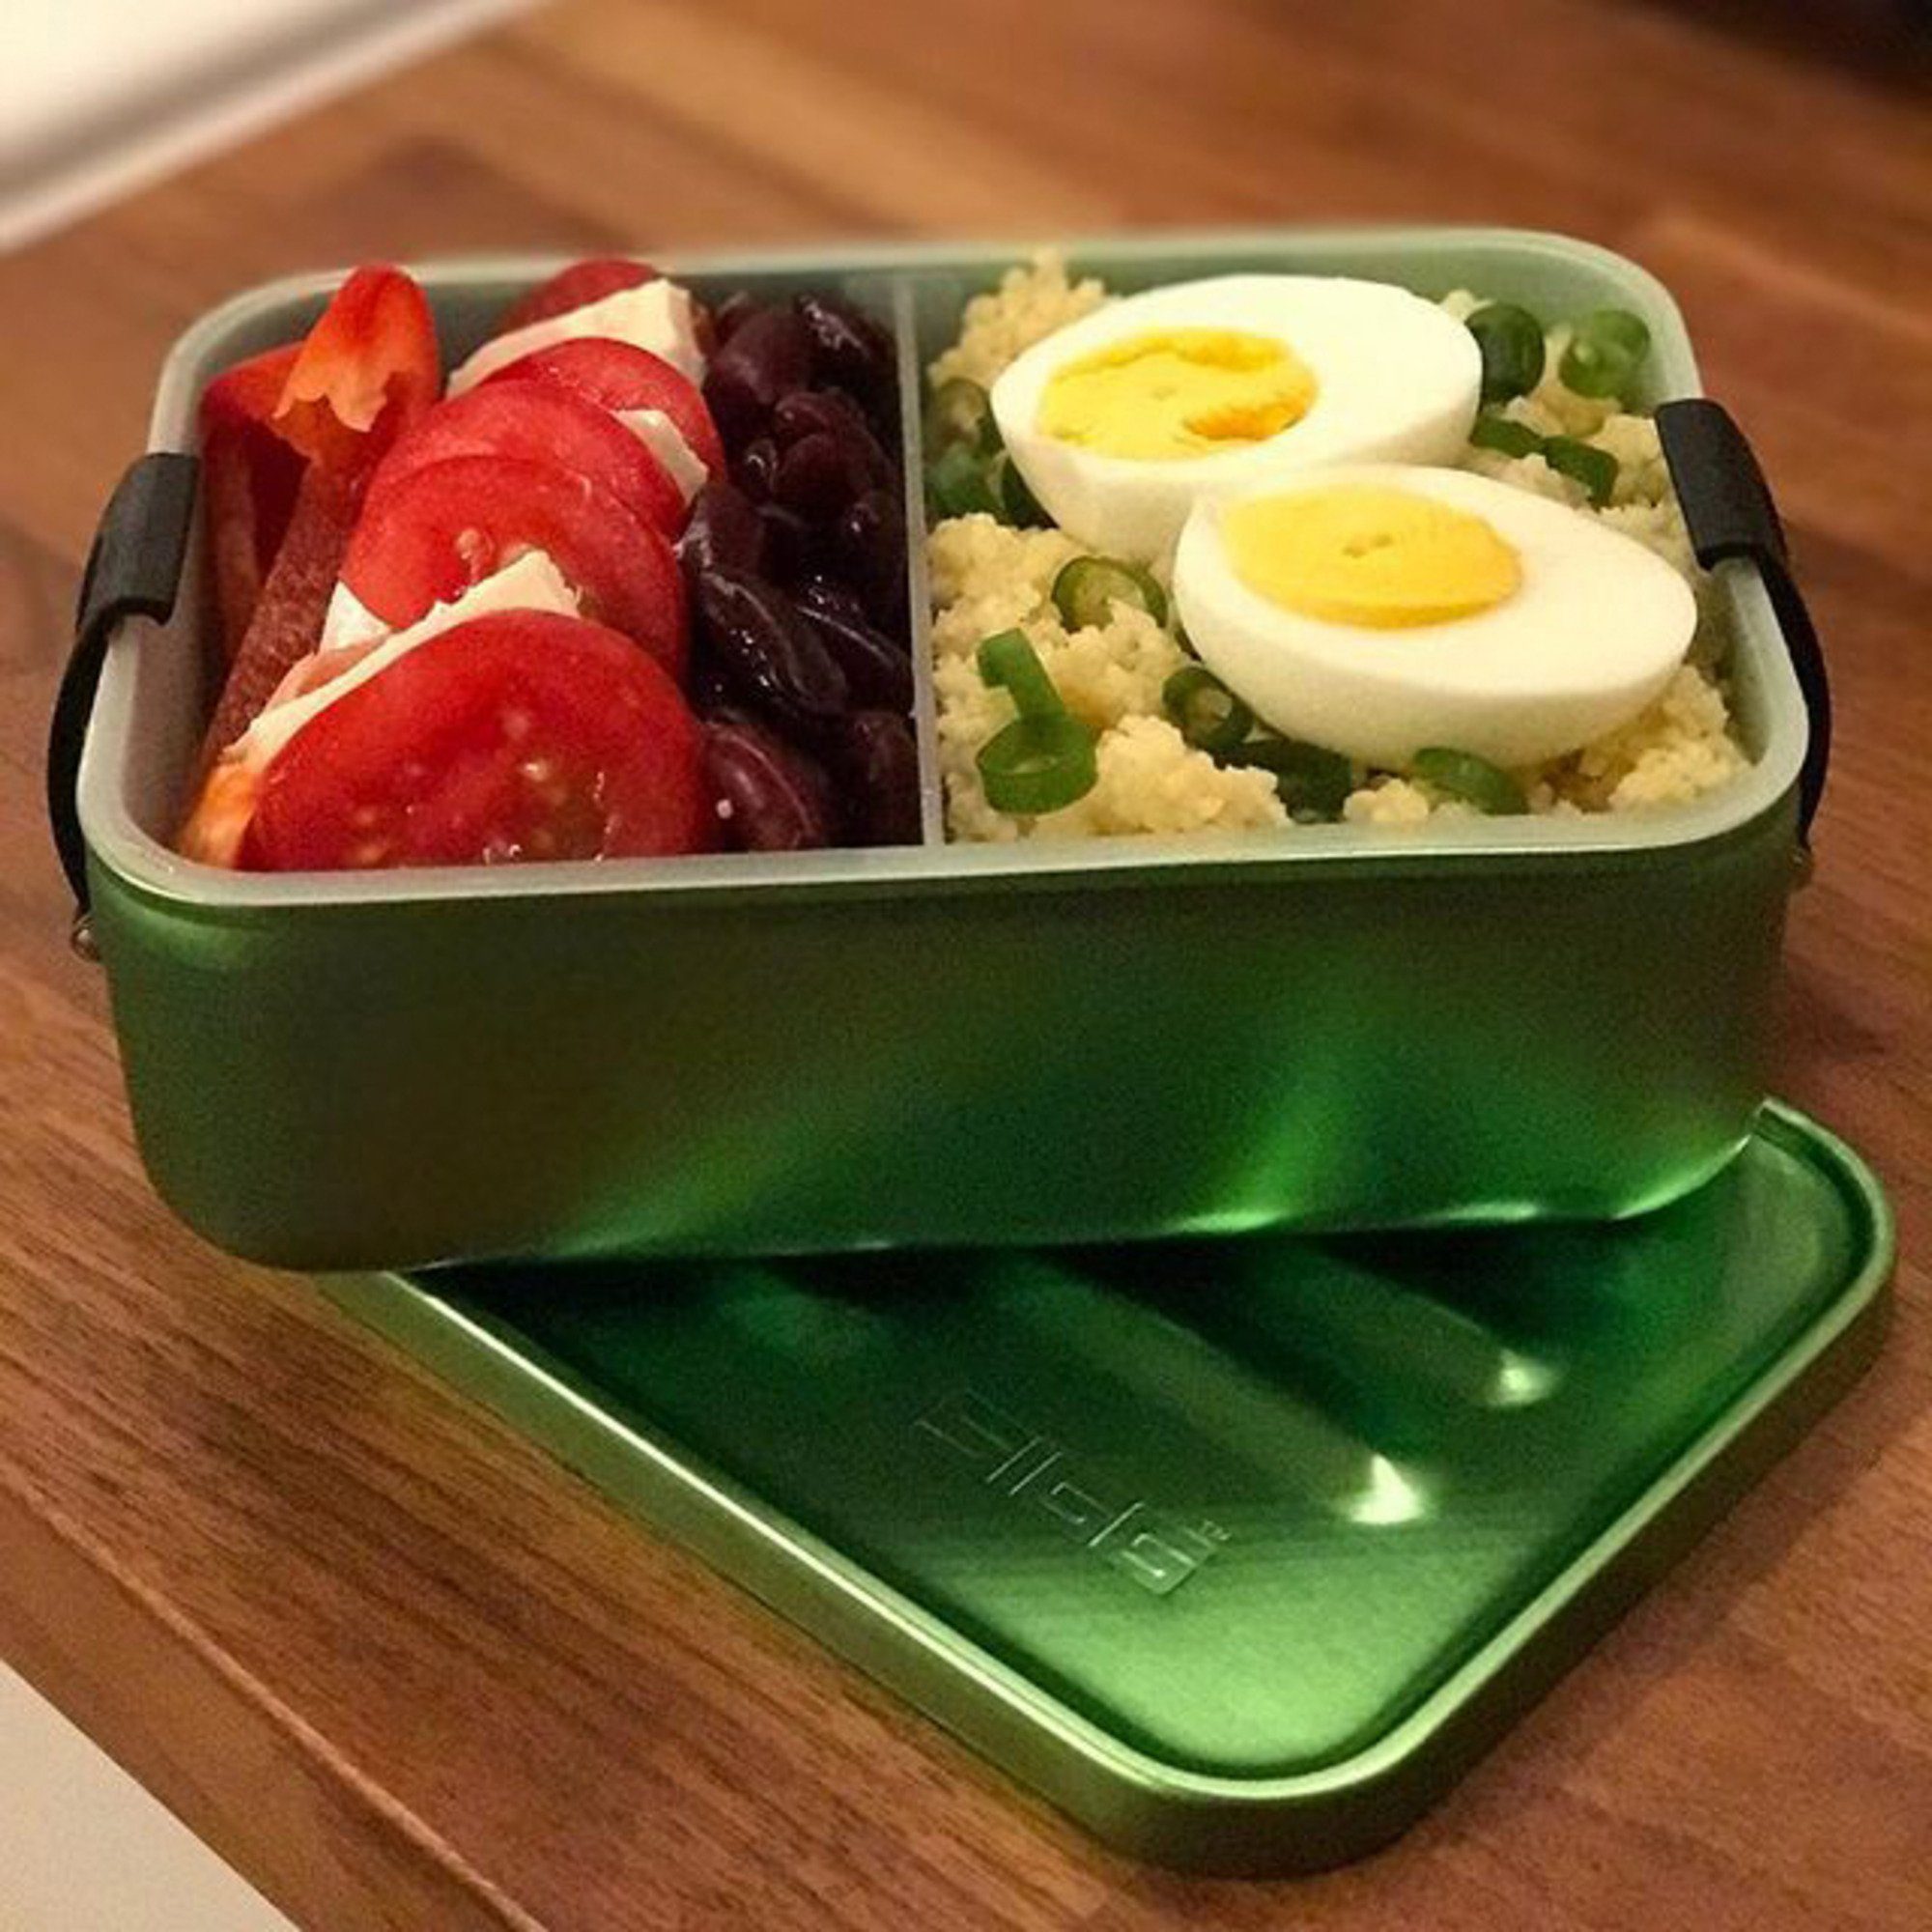 Sigg Geschirr-Set SIGG Lunch-Box grün Plus Metal Box S